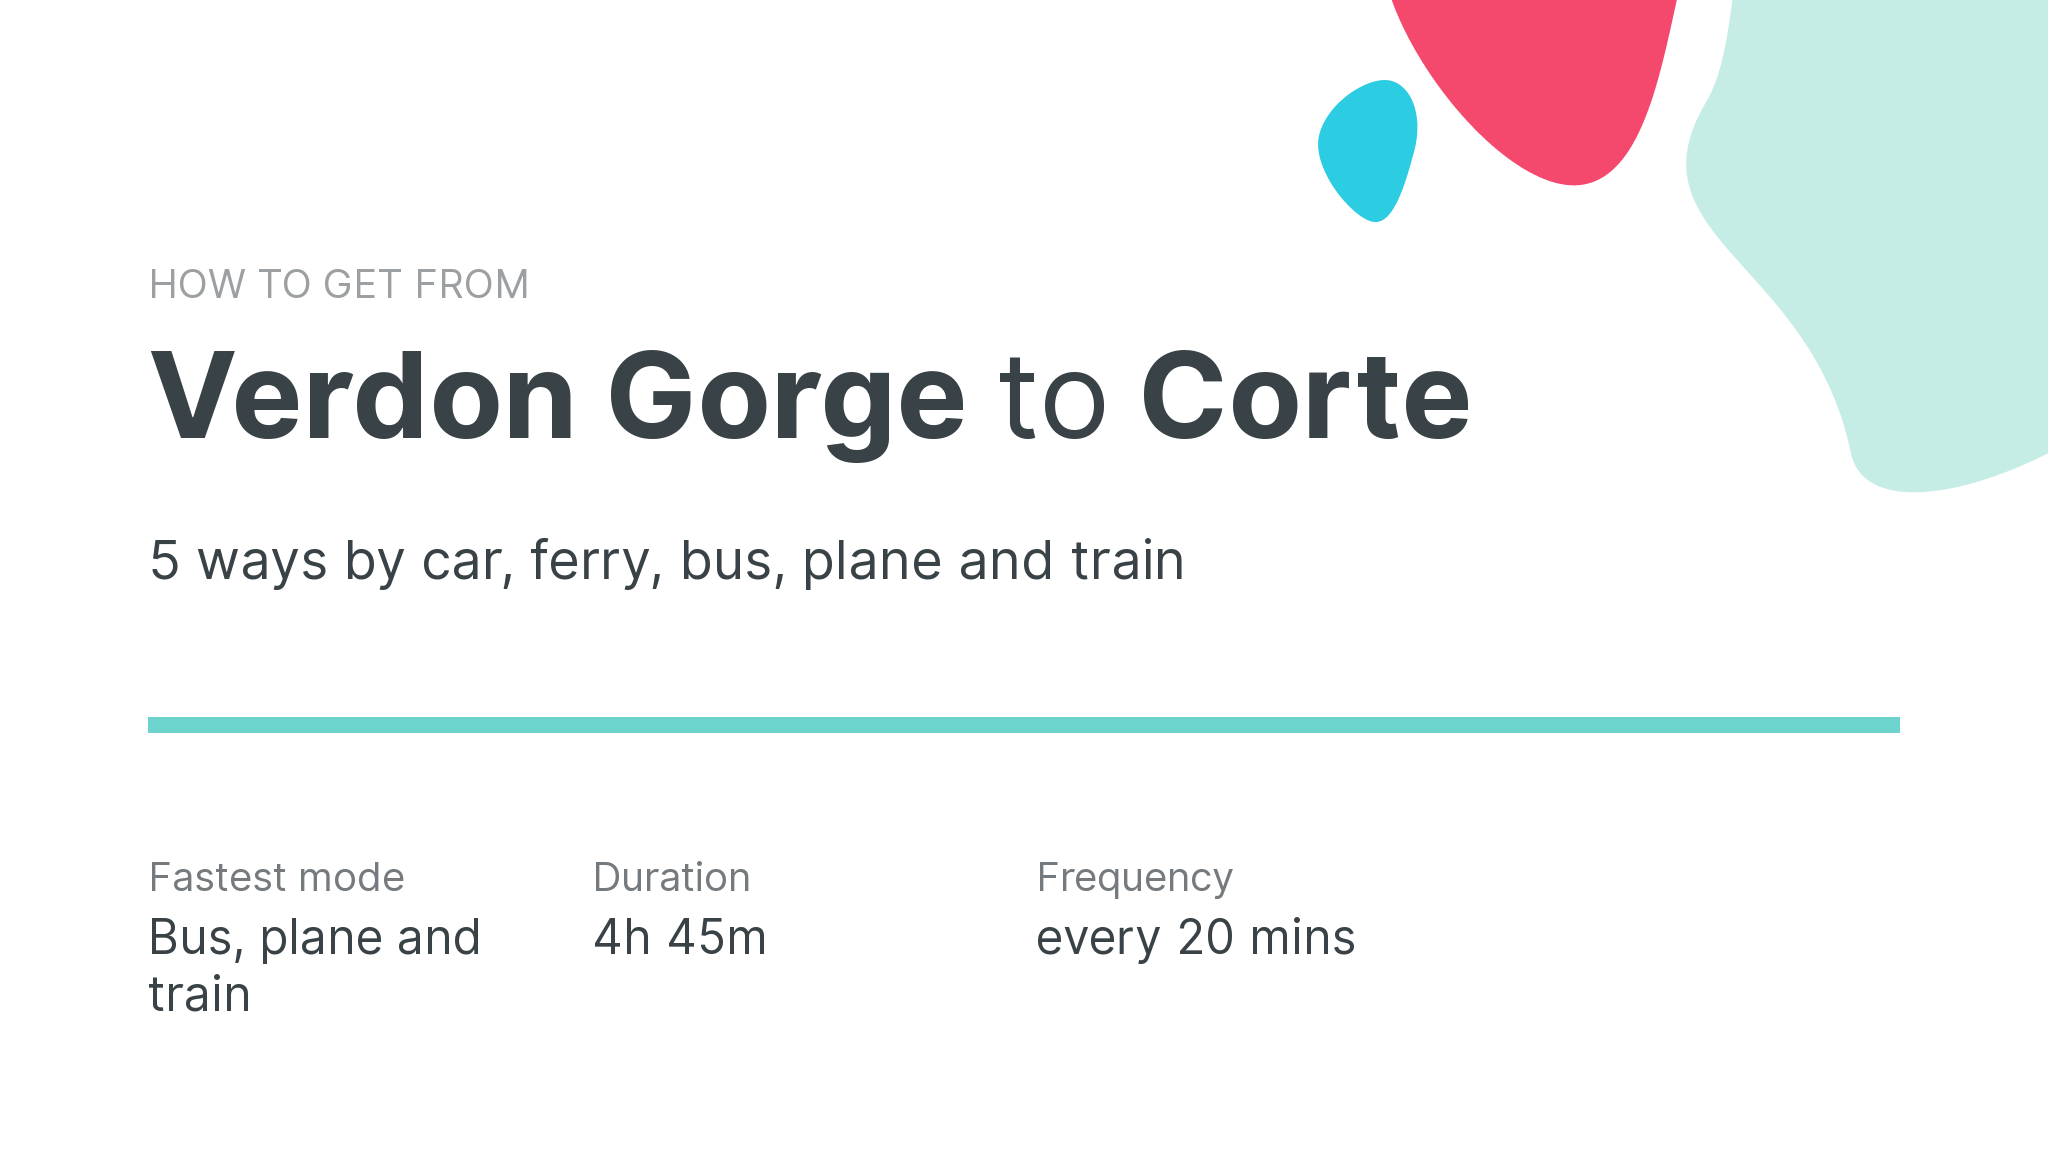 How do I get from Verdon Gorge to Corte